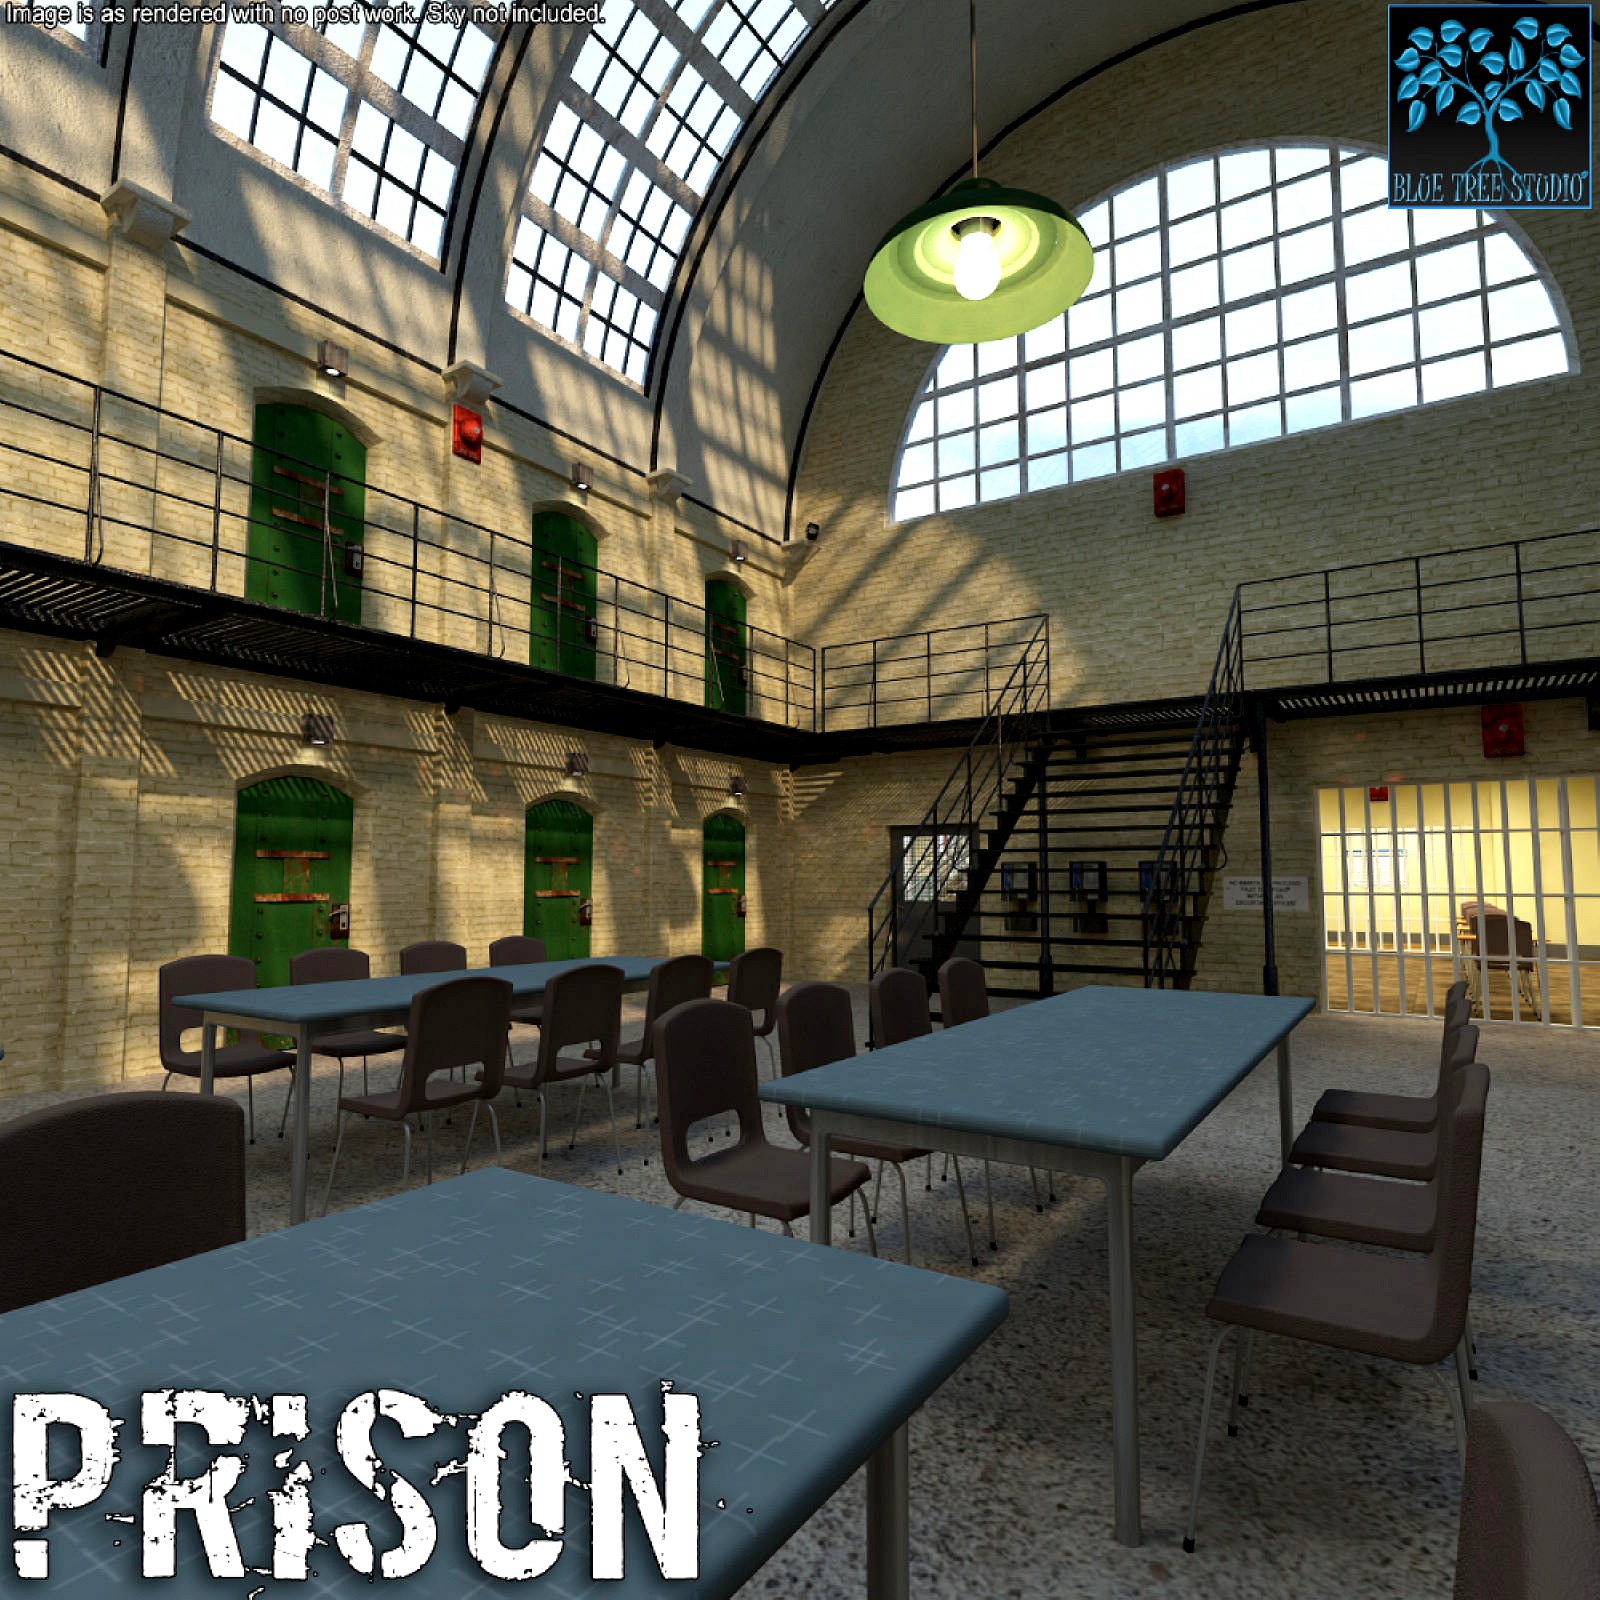 Prison for Poser